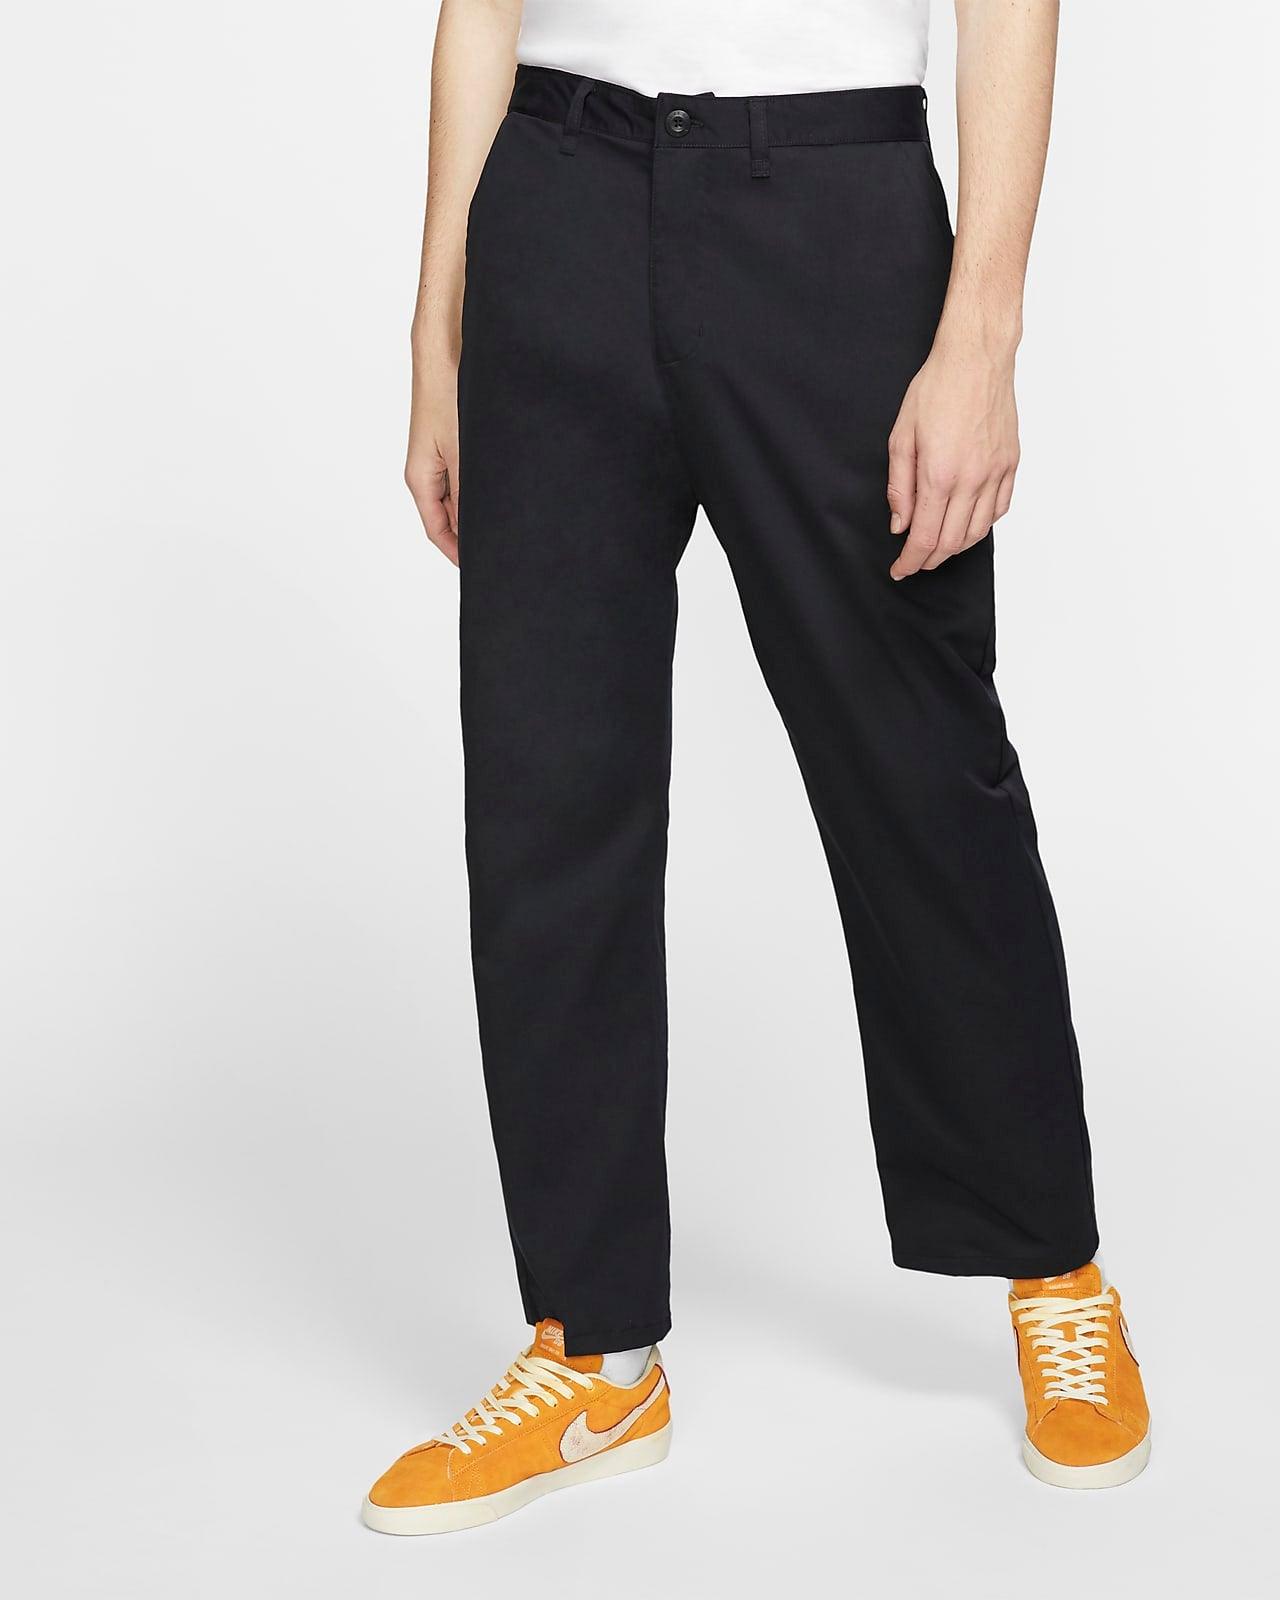 Nike SB Dri-Fit Loose Fit Chino Pants - (Black)